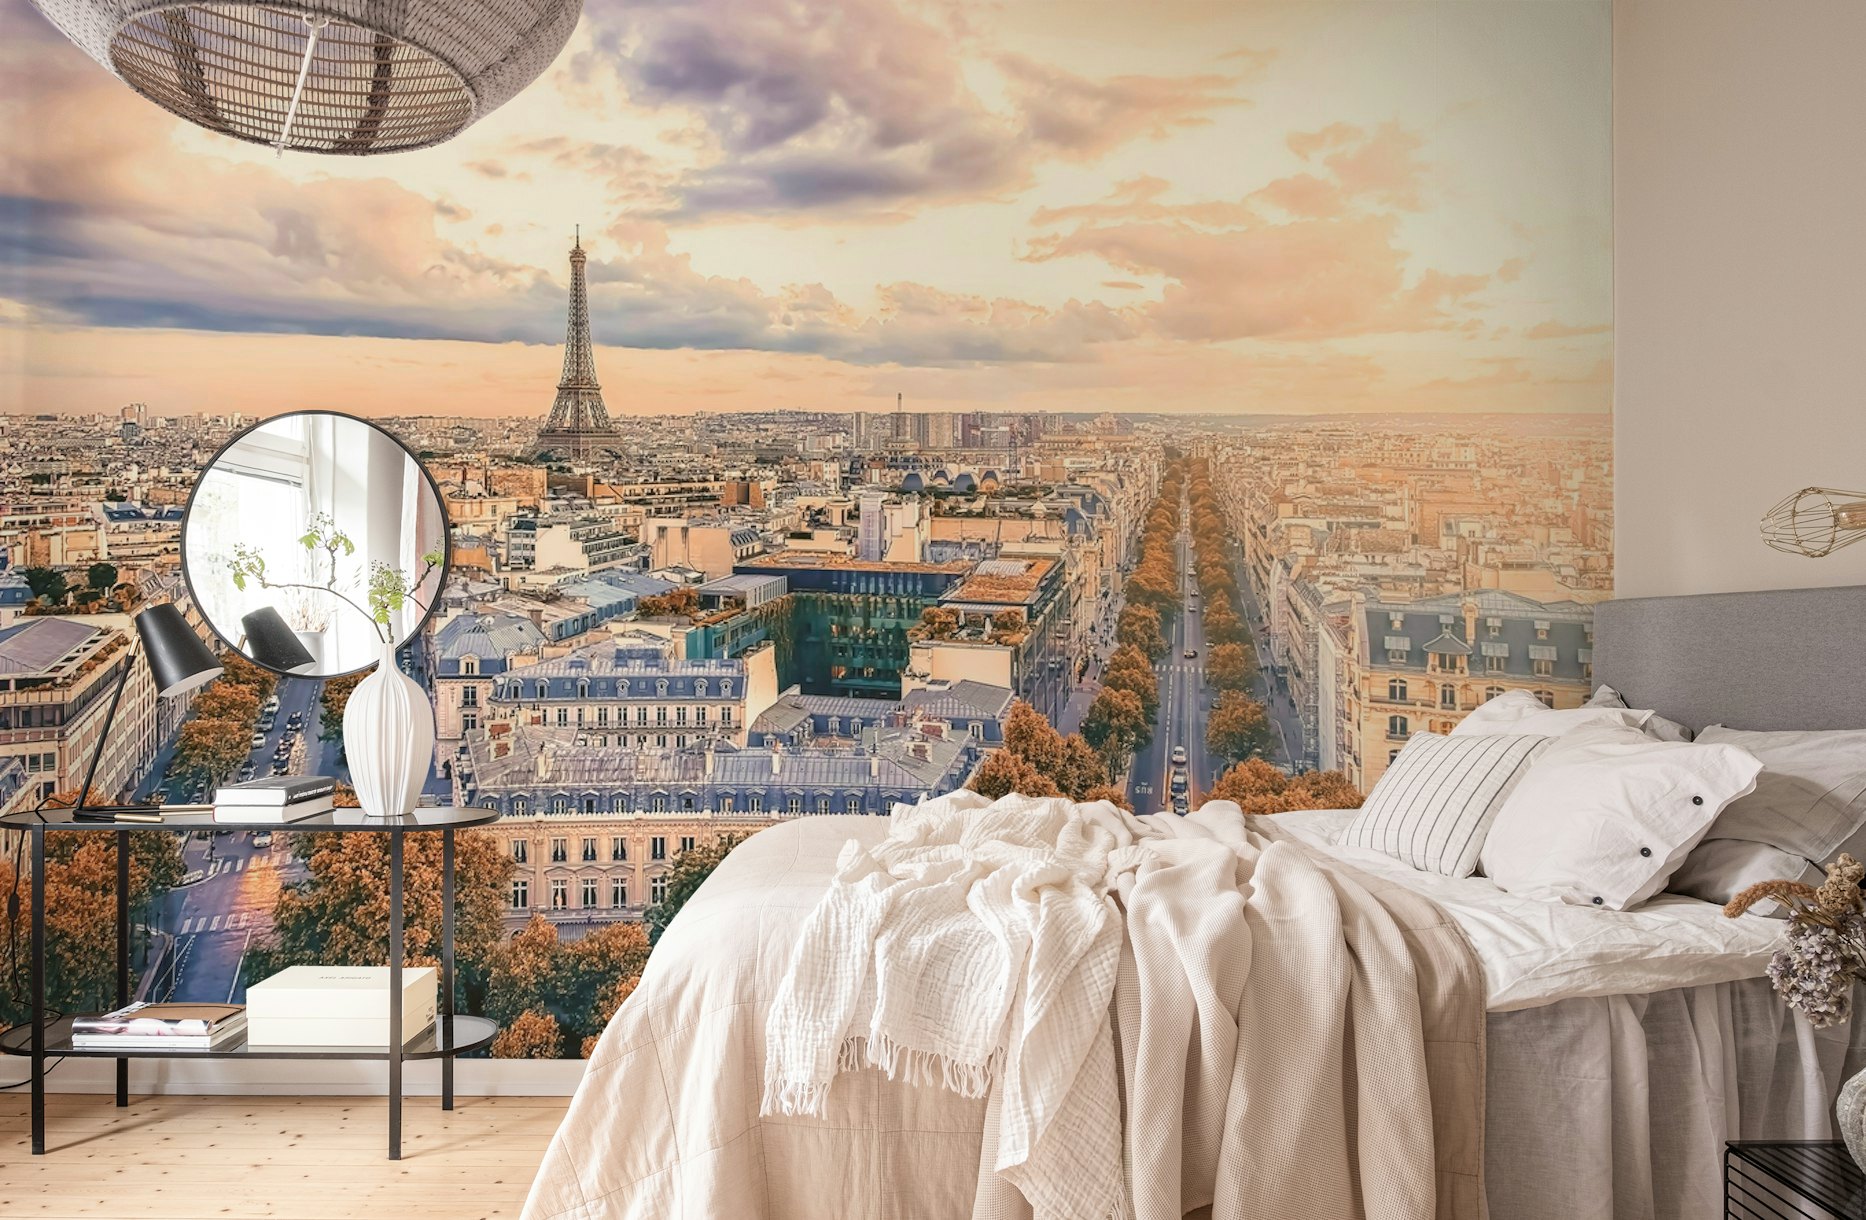 Paris sunset wallpaper